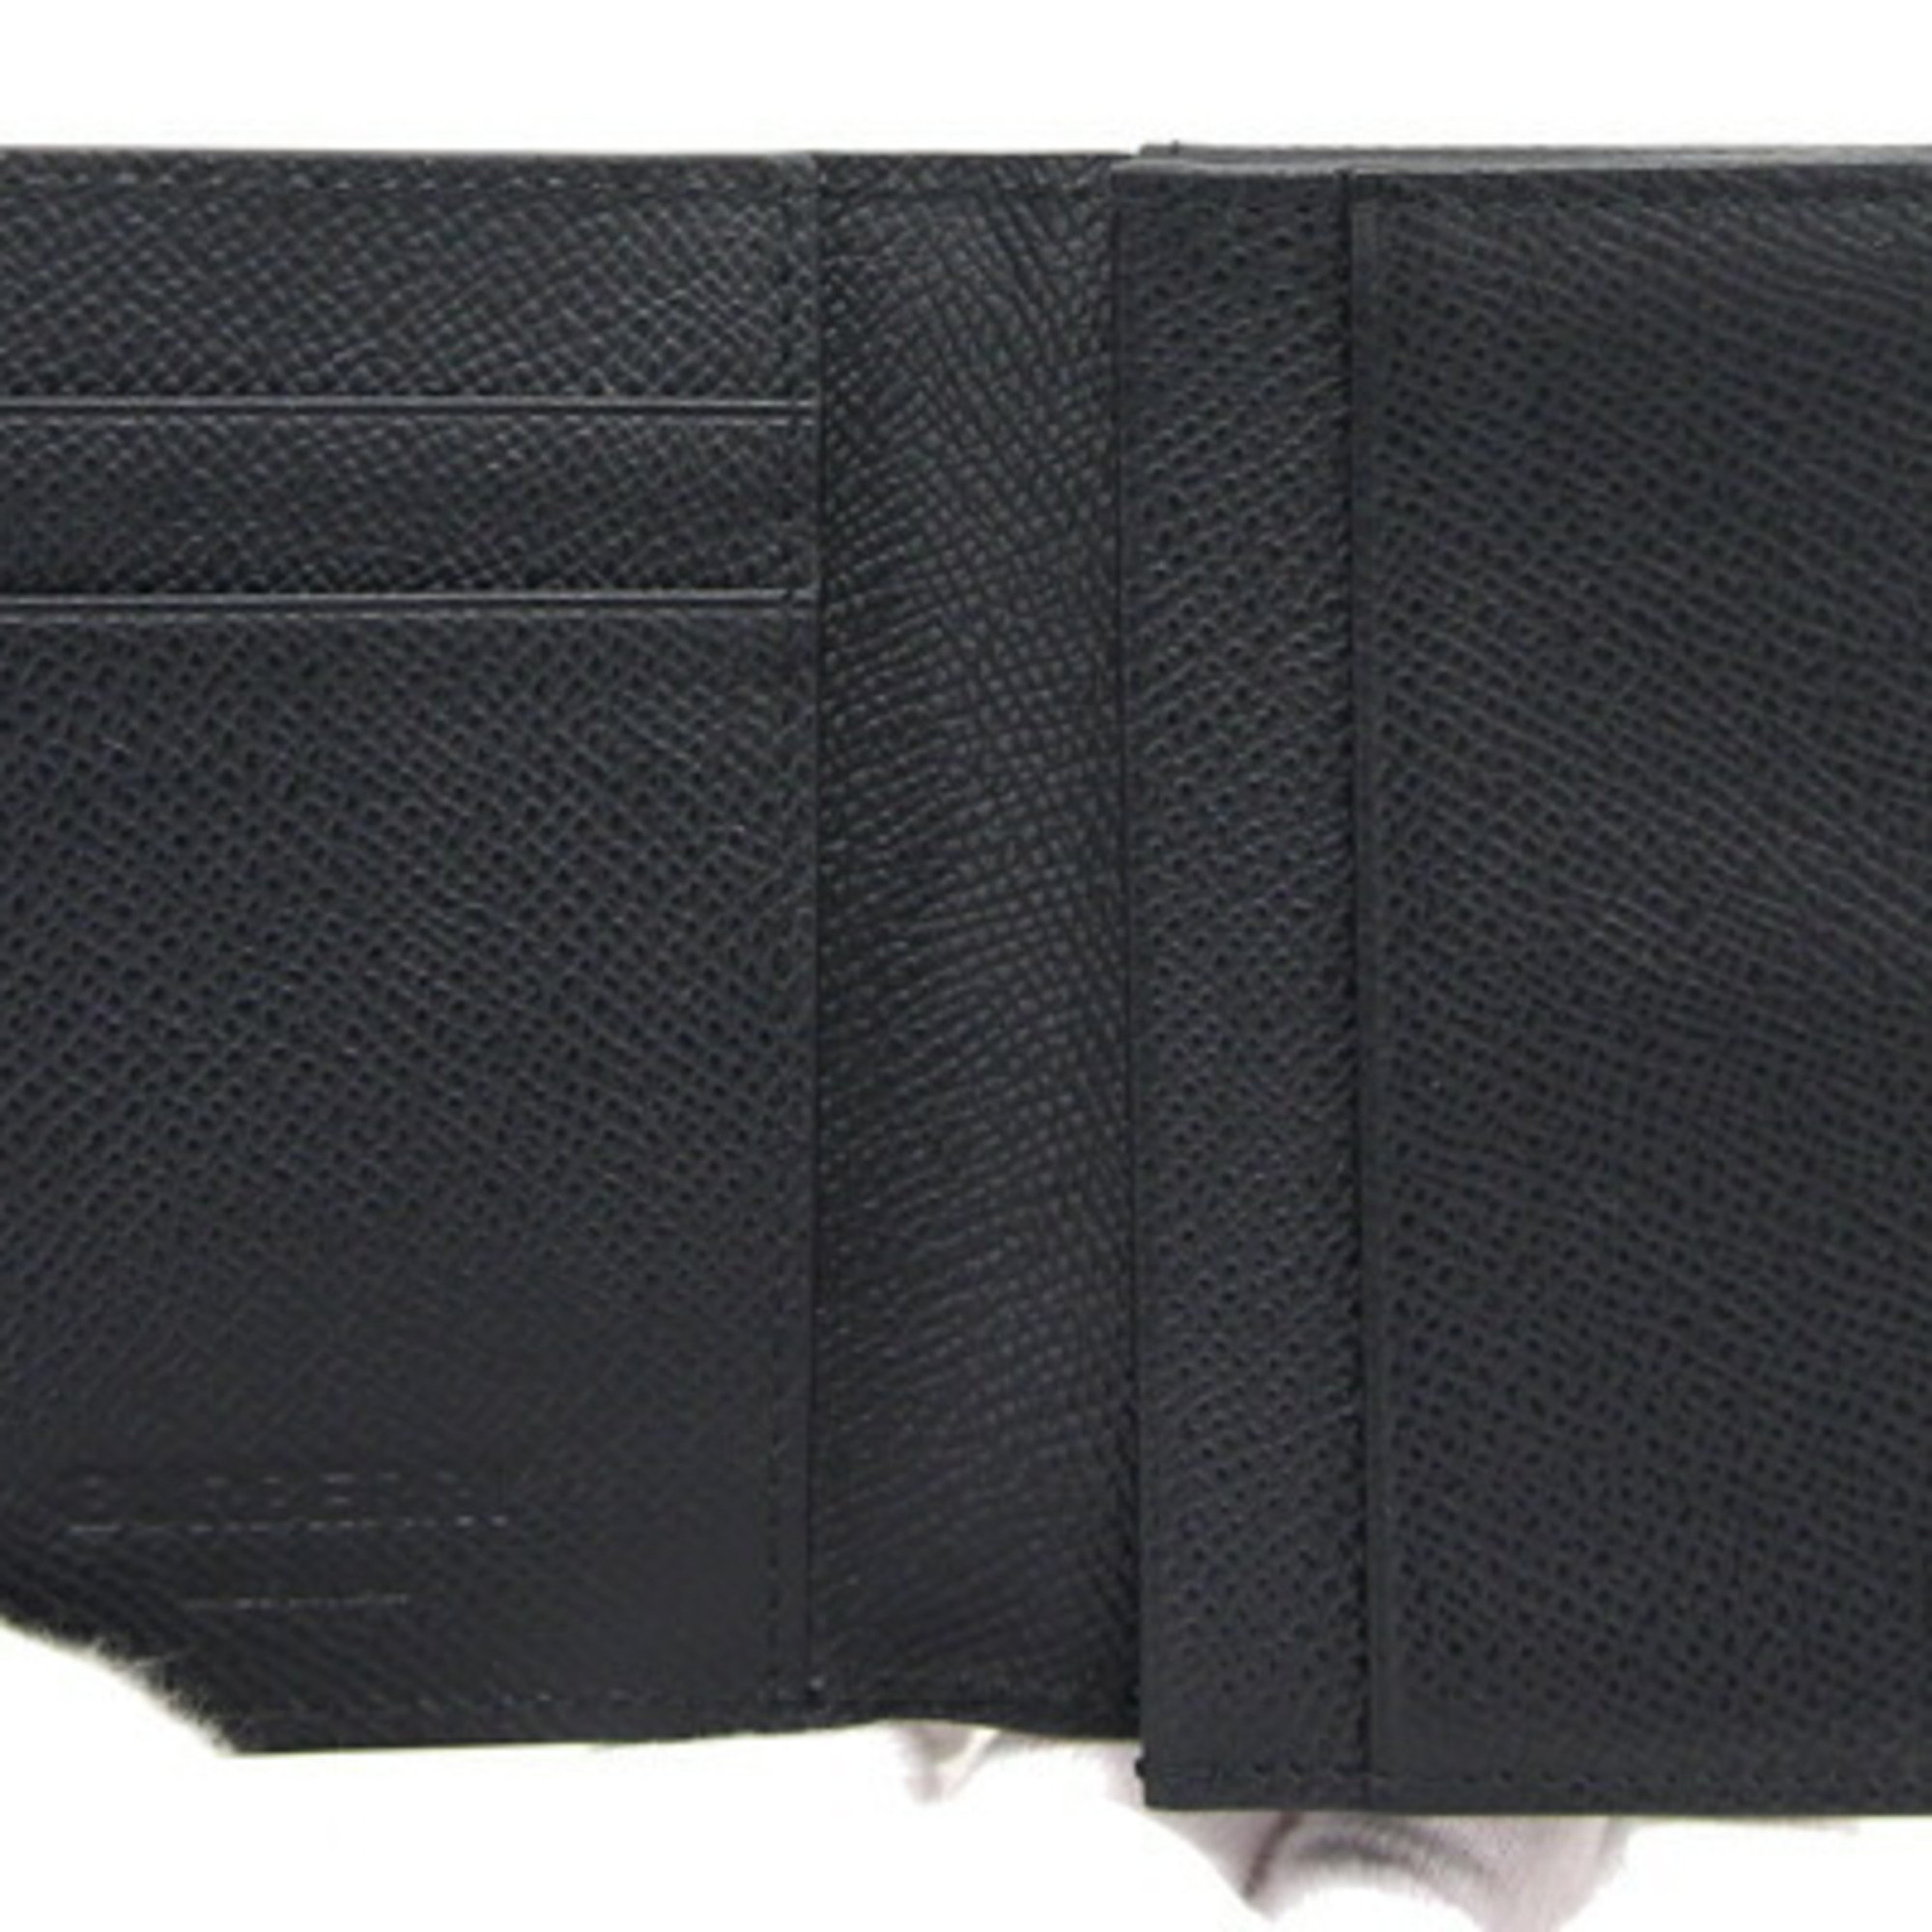 Burberry Business Card Holder Black Leather Case Men's BURBERRY